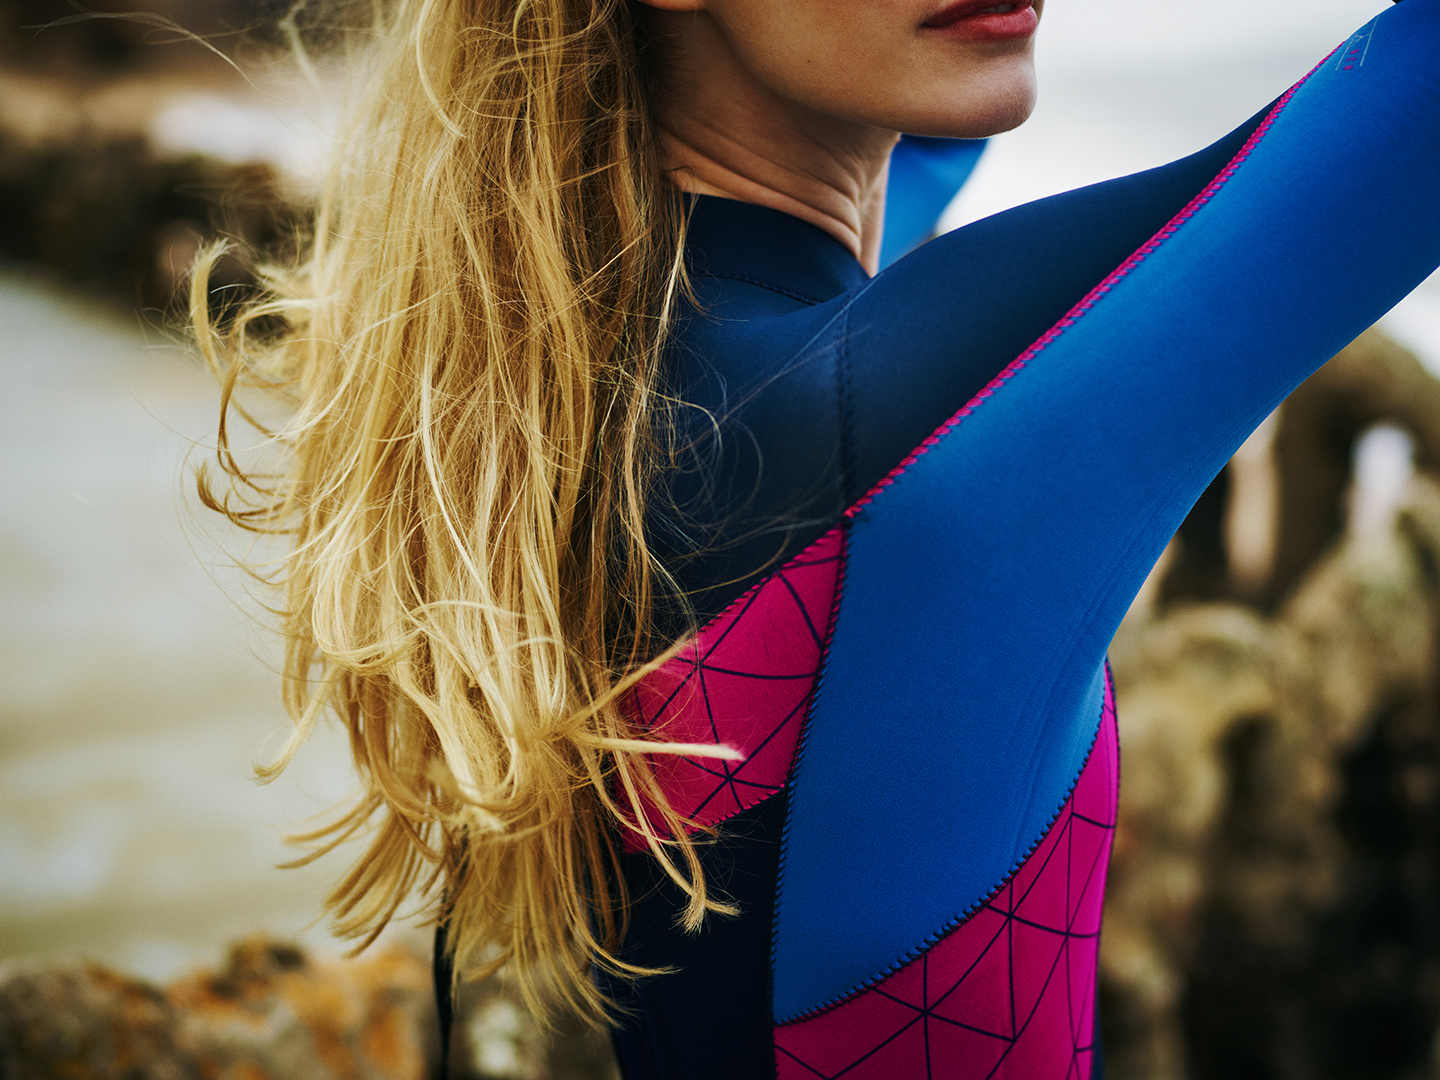 Our most feminine wetsuit - temptation island💕